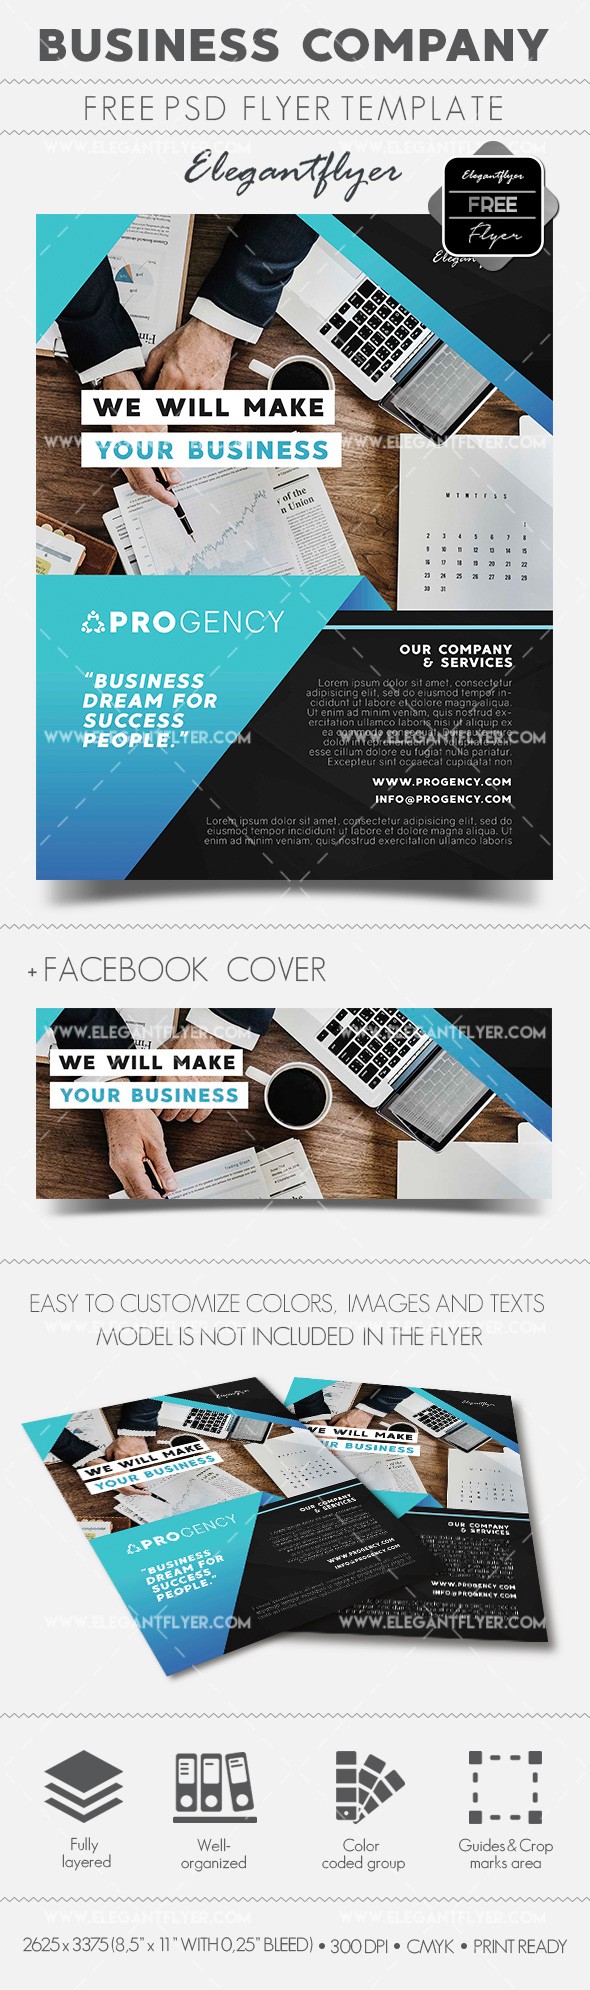 Business Company Flyer by ElegantFlyer